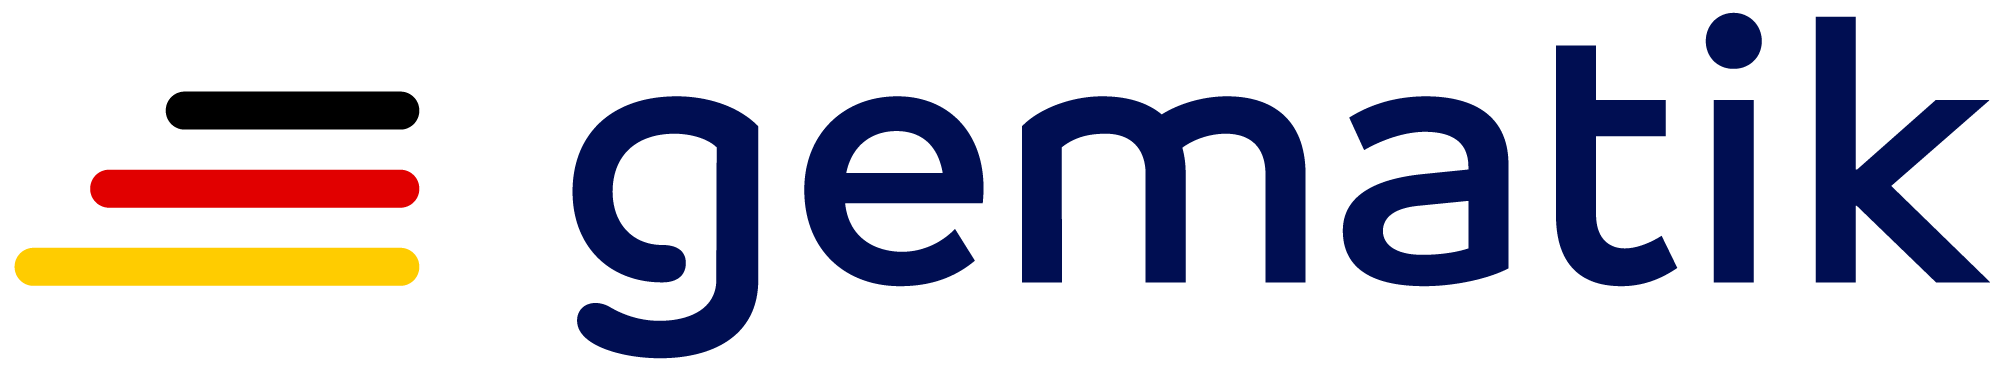 Gematik's logo